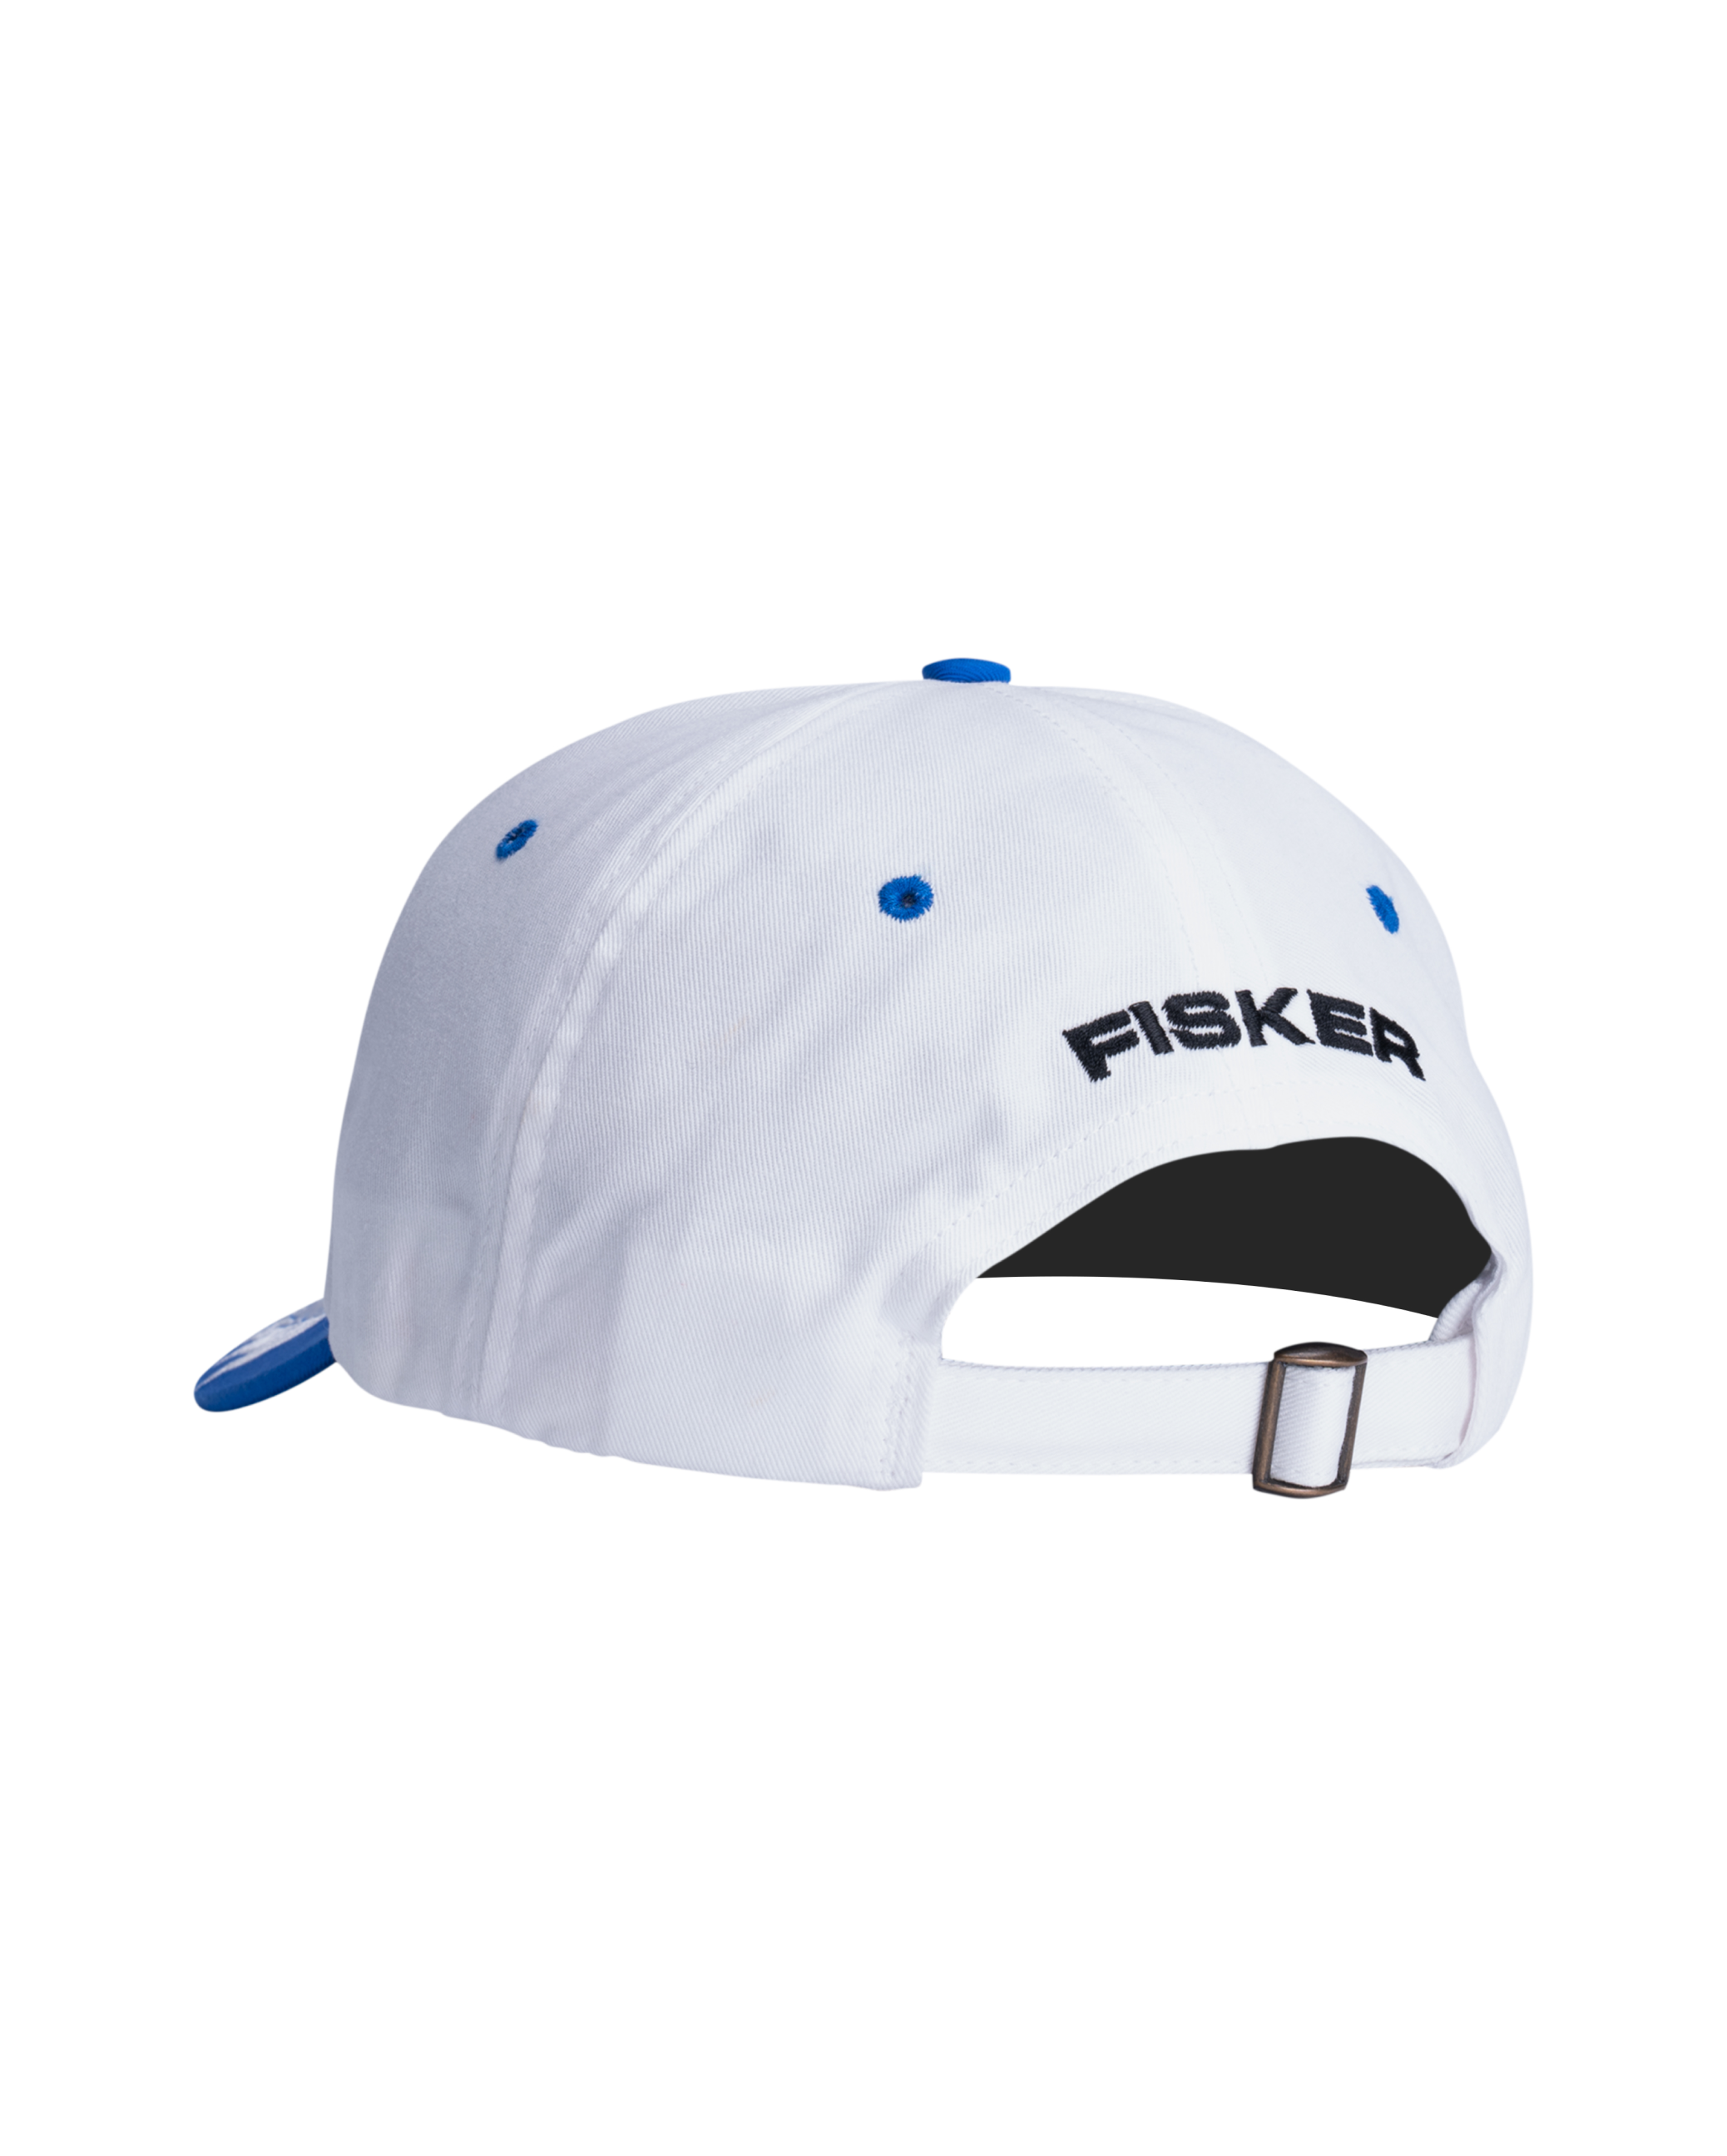 Fisker Organic Racing Hat, , large image number 3